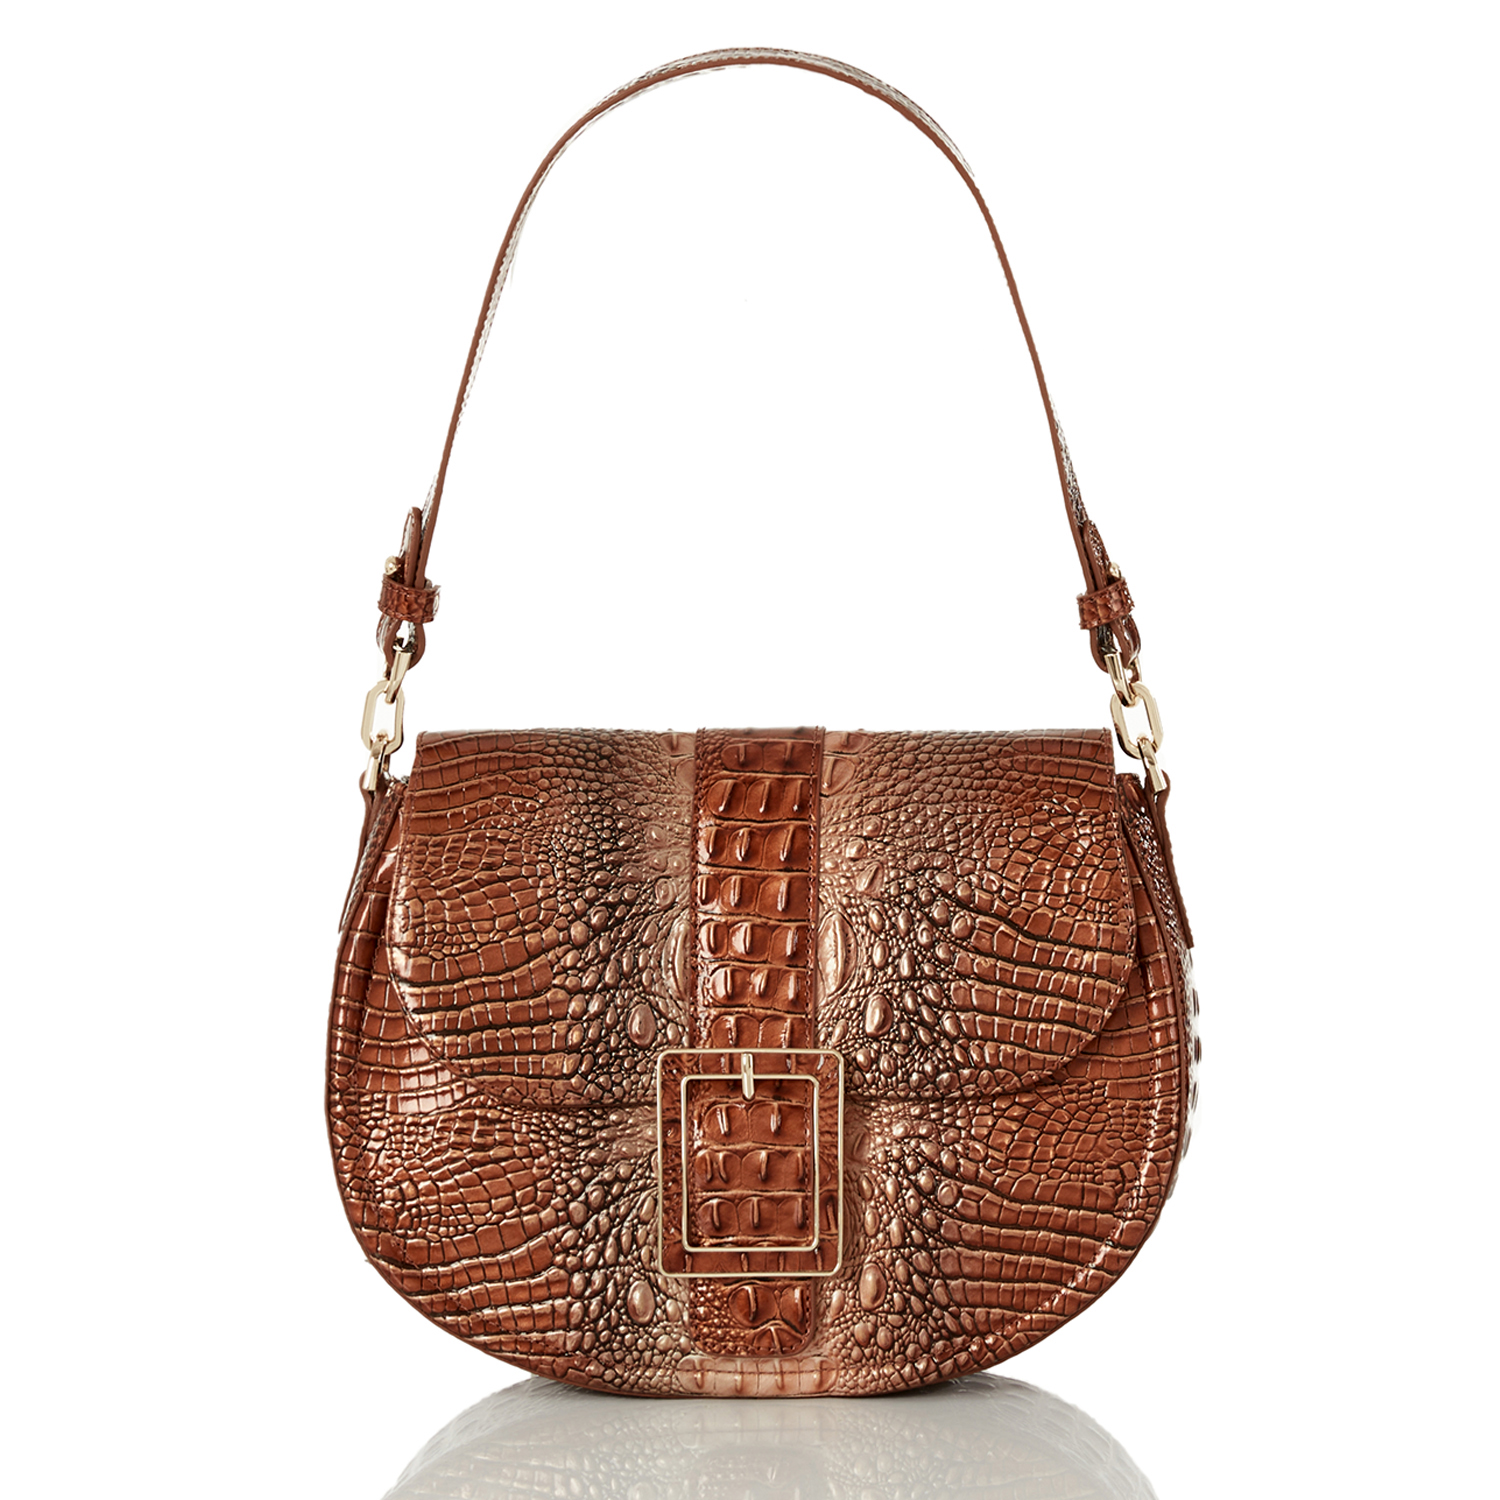 Brahmin Jody Cross Body Bag, Pimento, One Size : Amazon.in: Shoes & Handbags